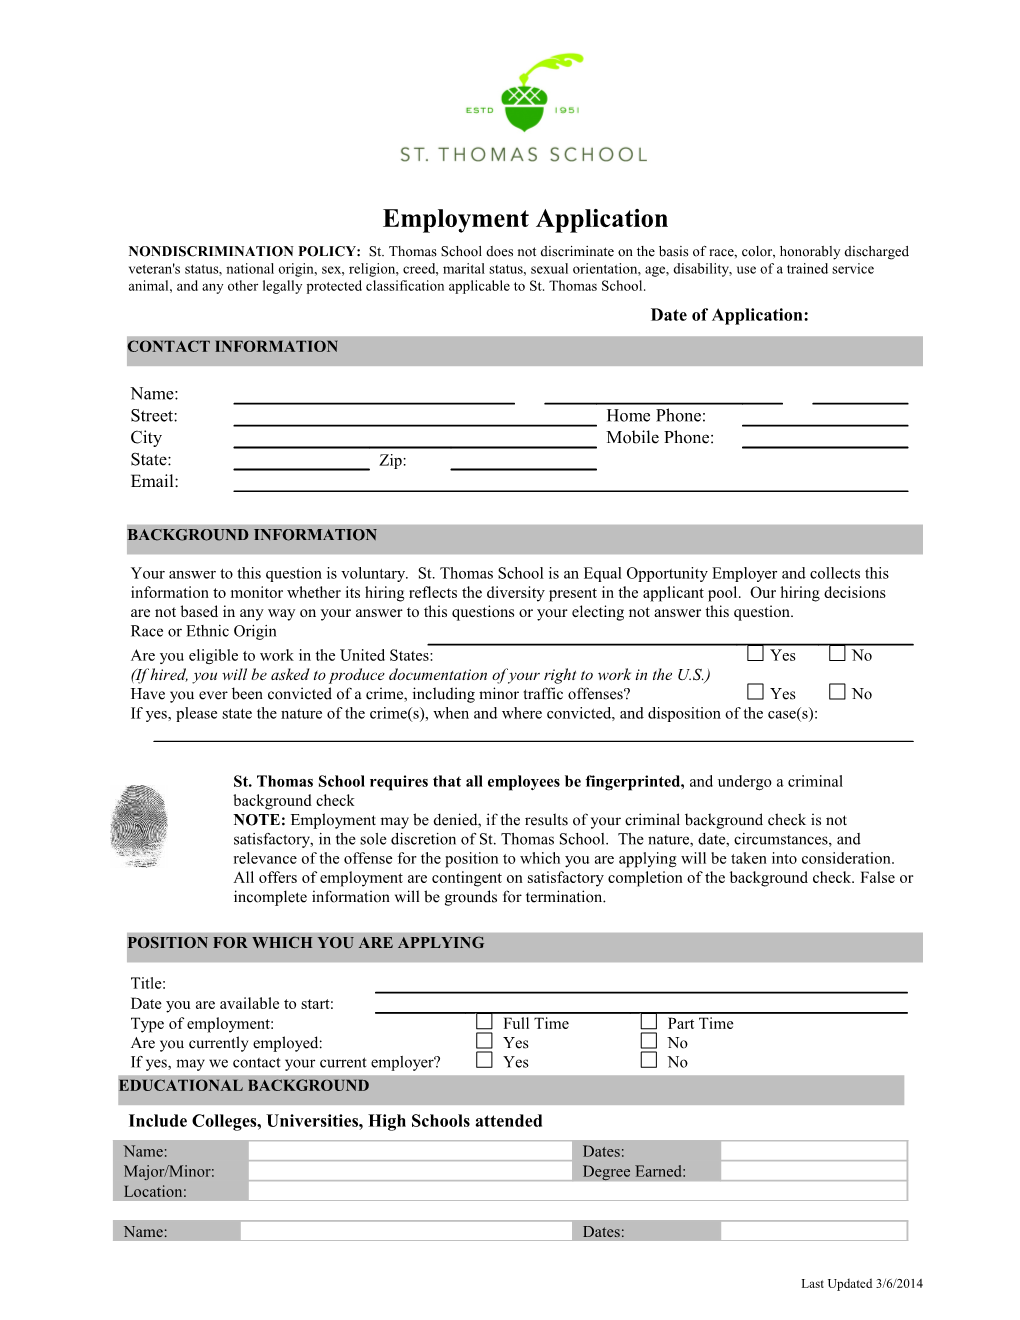 Employment Application s22